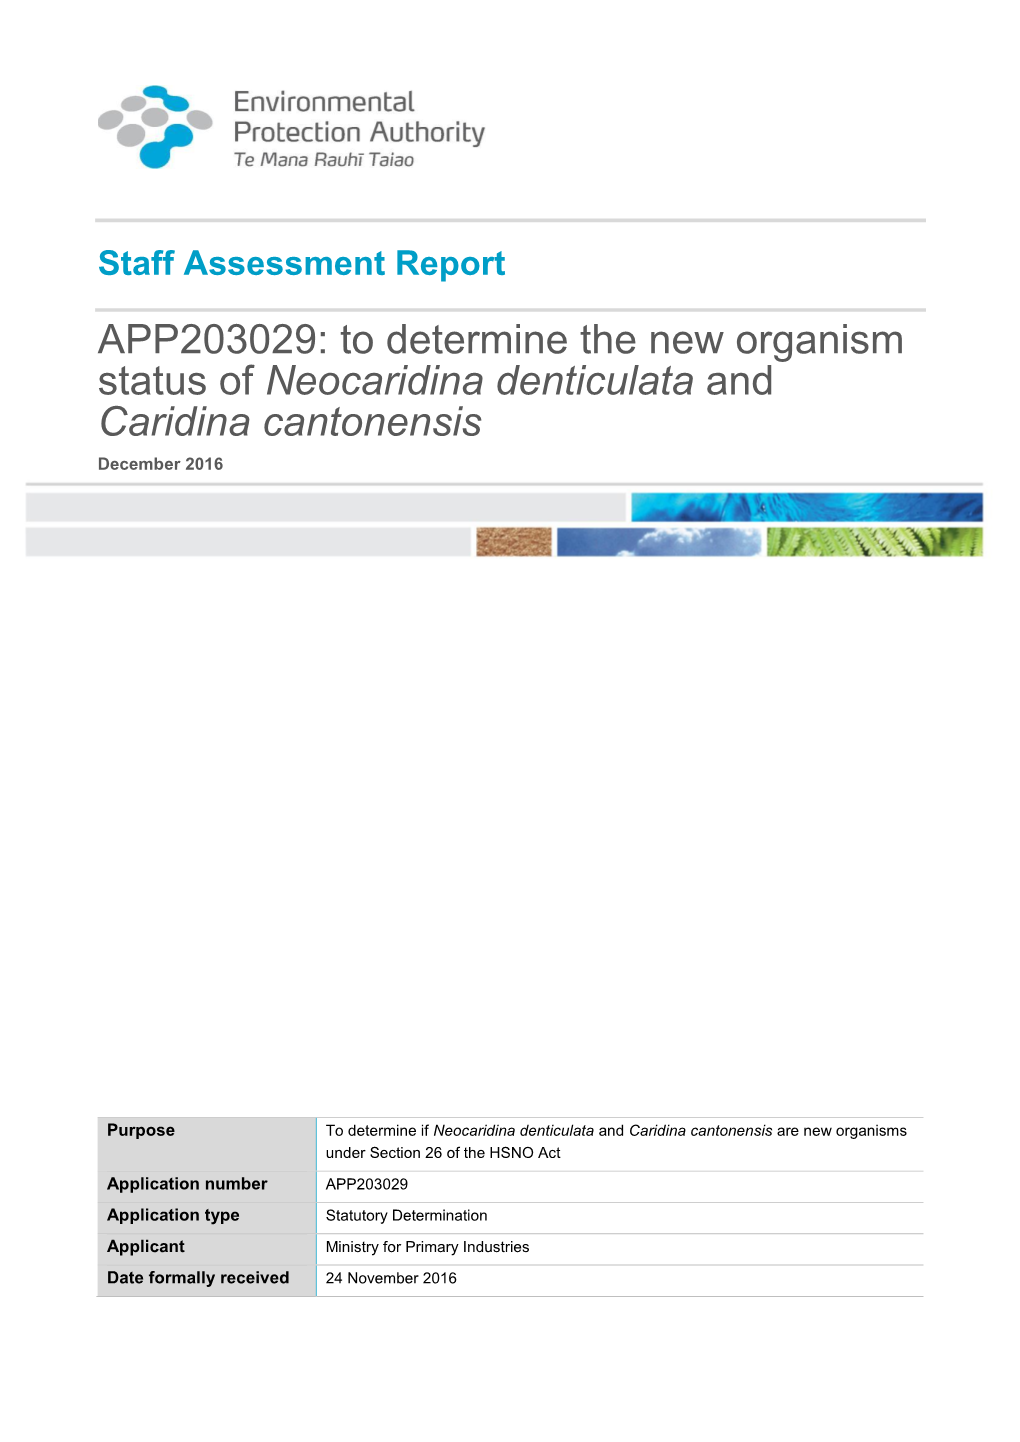 APP203029: to Determine the New Organism Status of Neocaridina Denticulata and Caridina Cantonensis December 2016